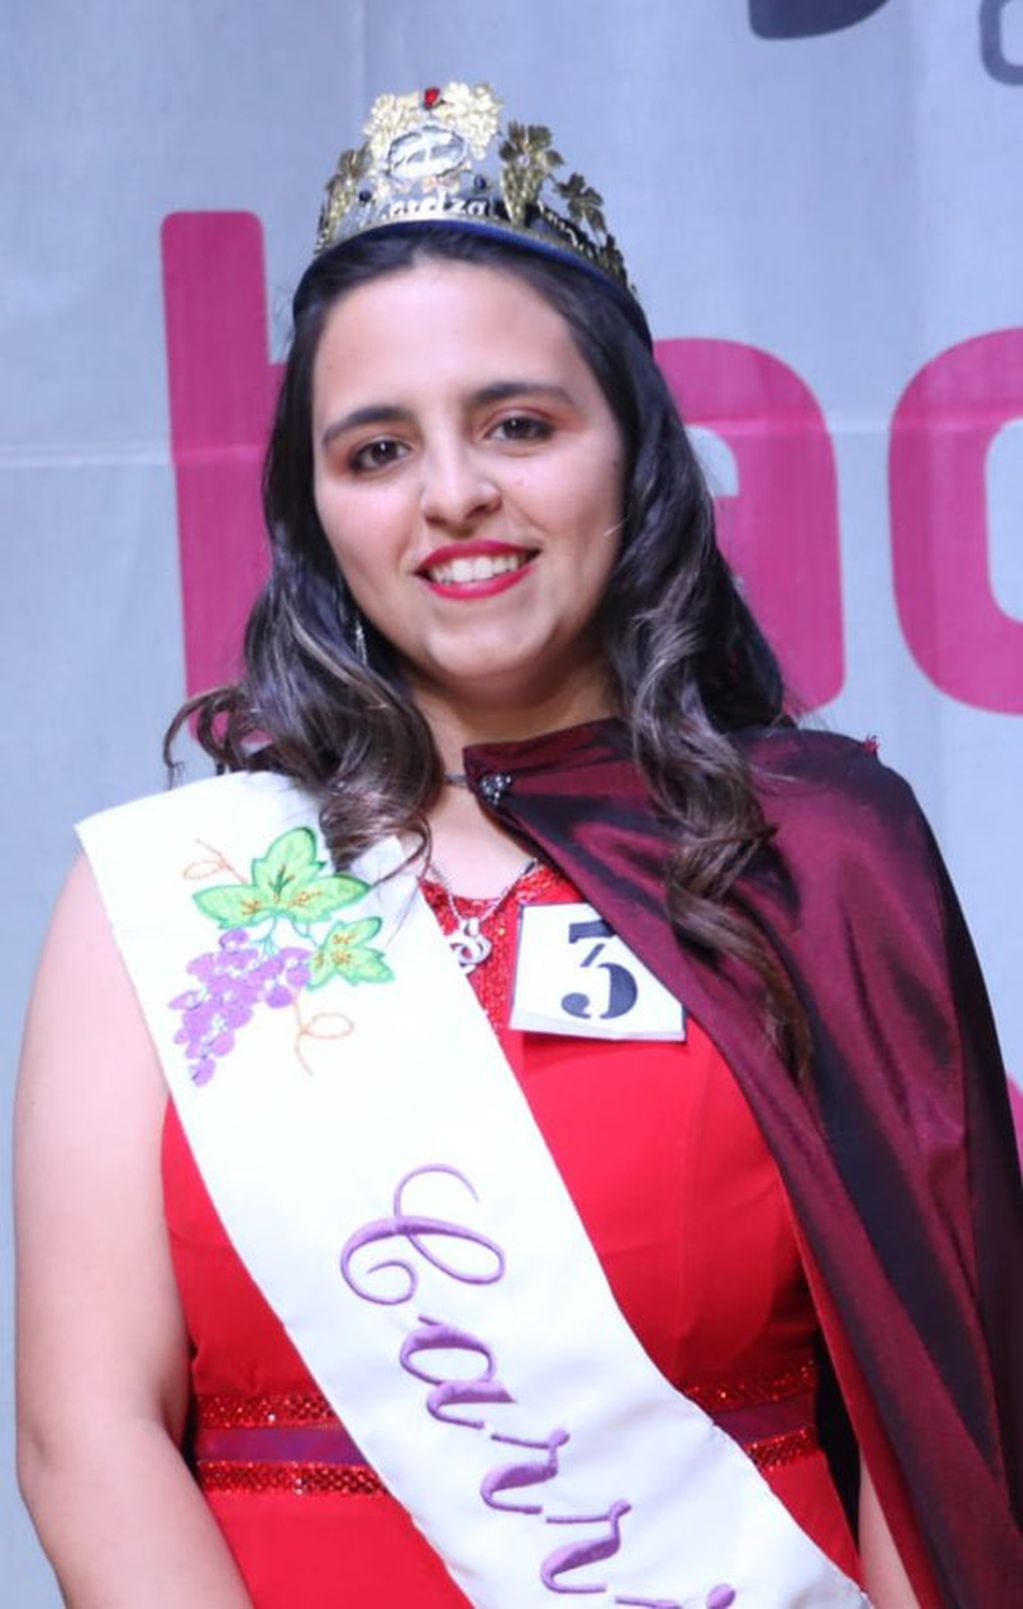 Micaela Paola Arce, reina del distrito de El Carrizal.